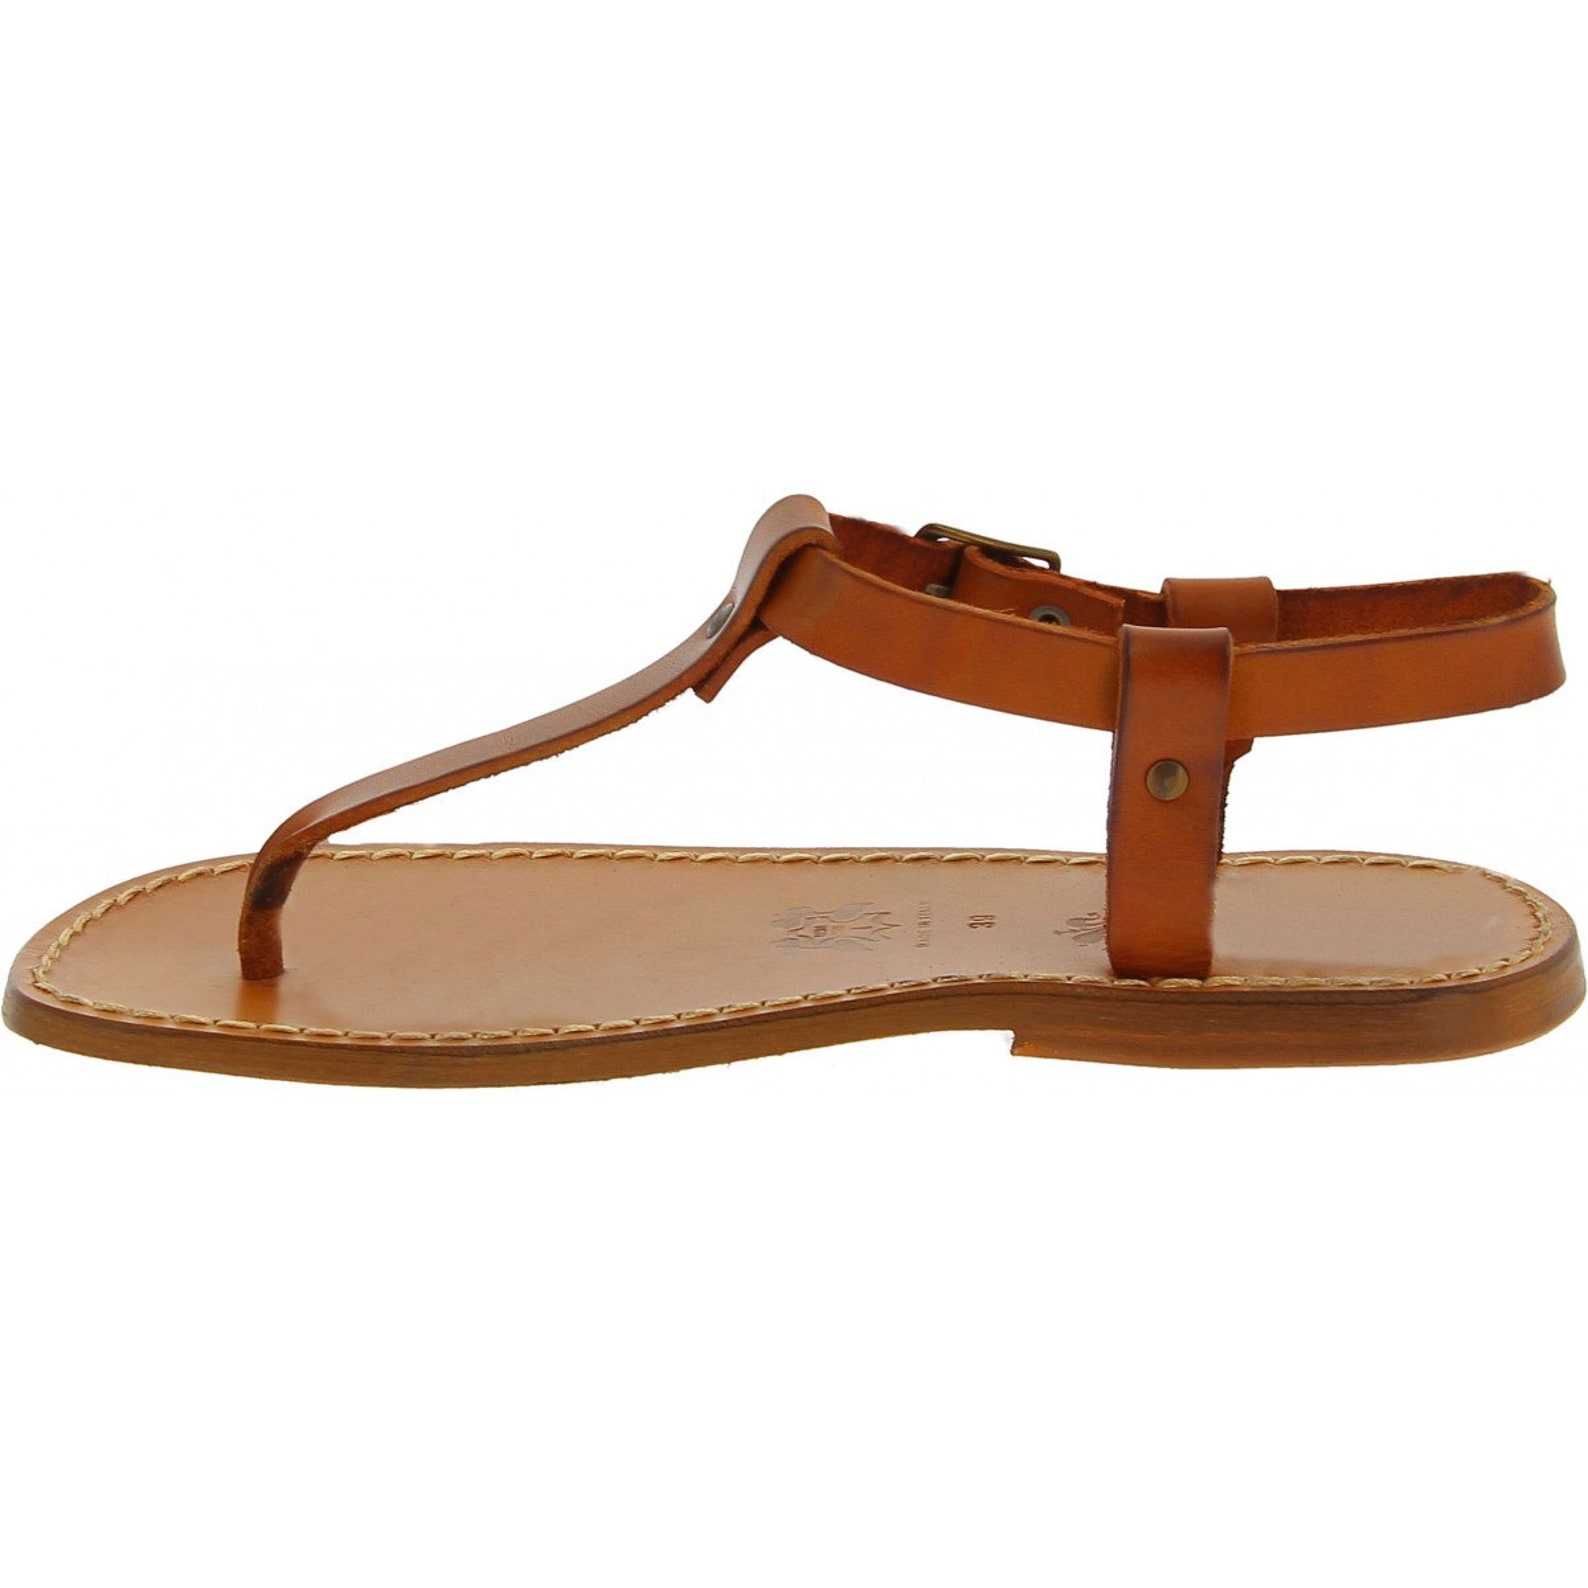 Handmade men's tan leather thong sandals Gianluca | Etsy